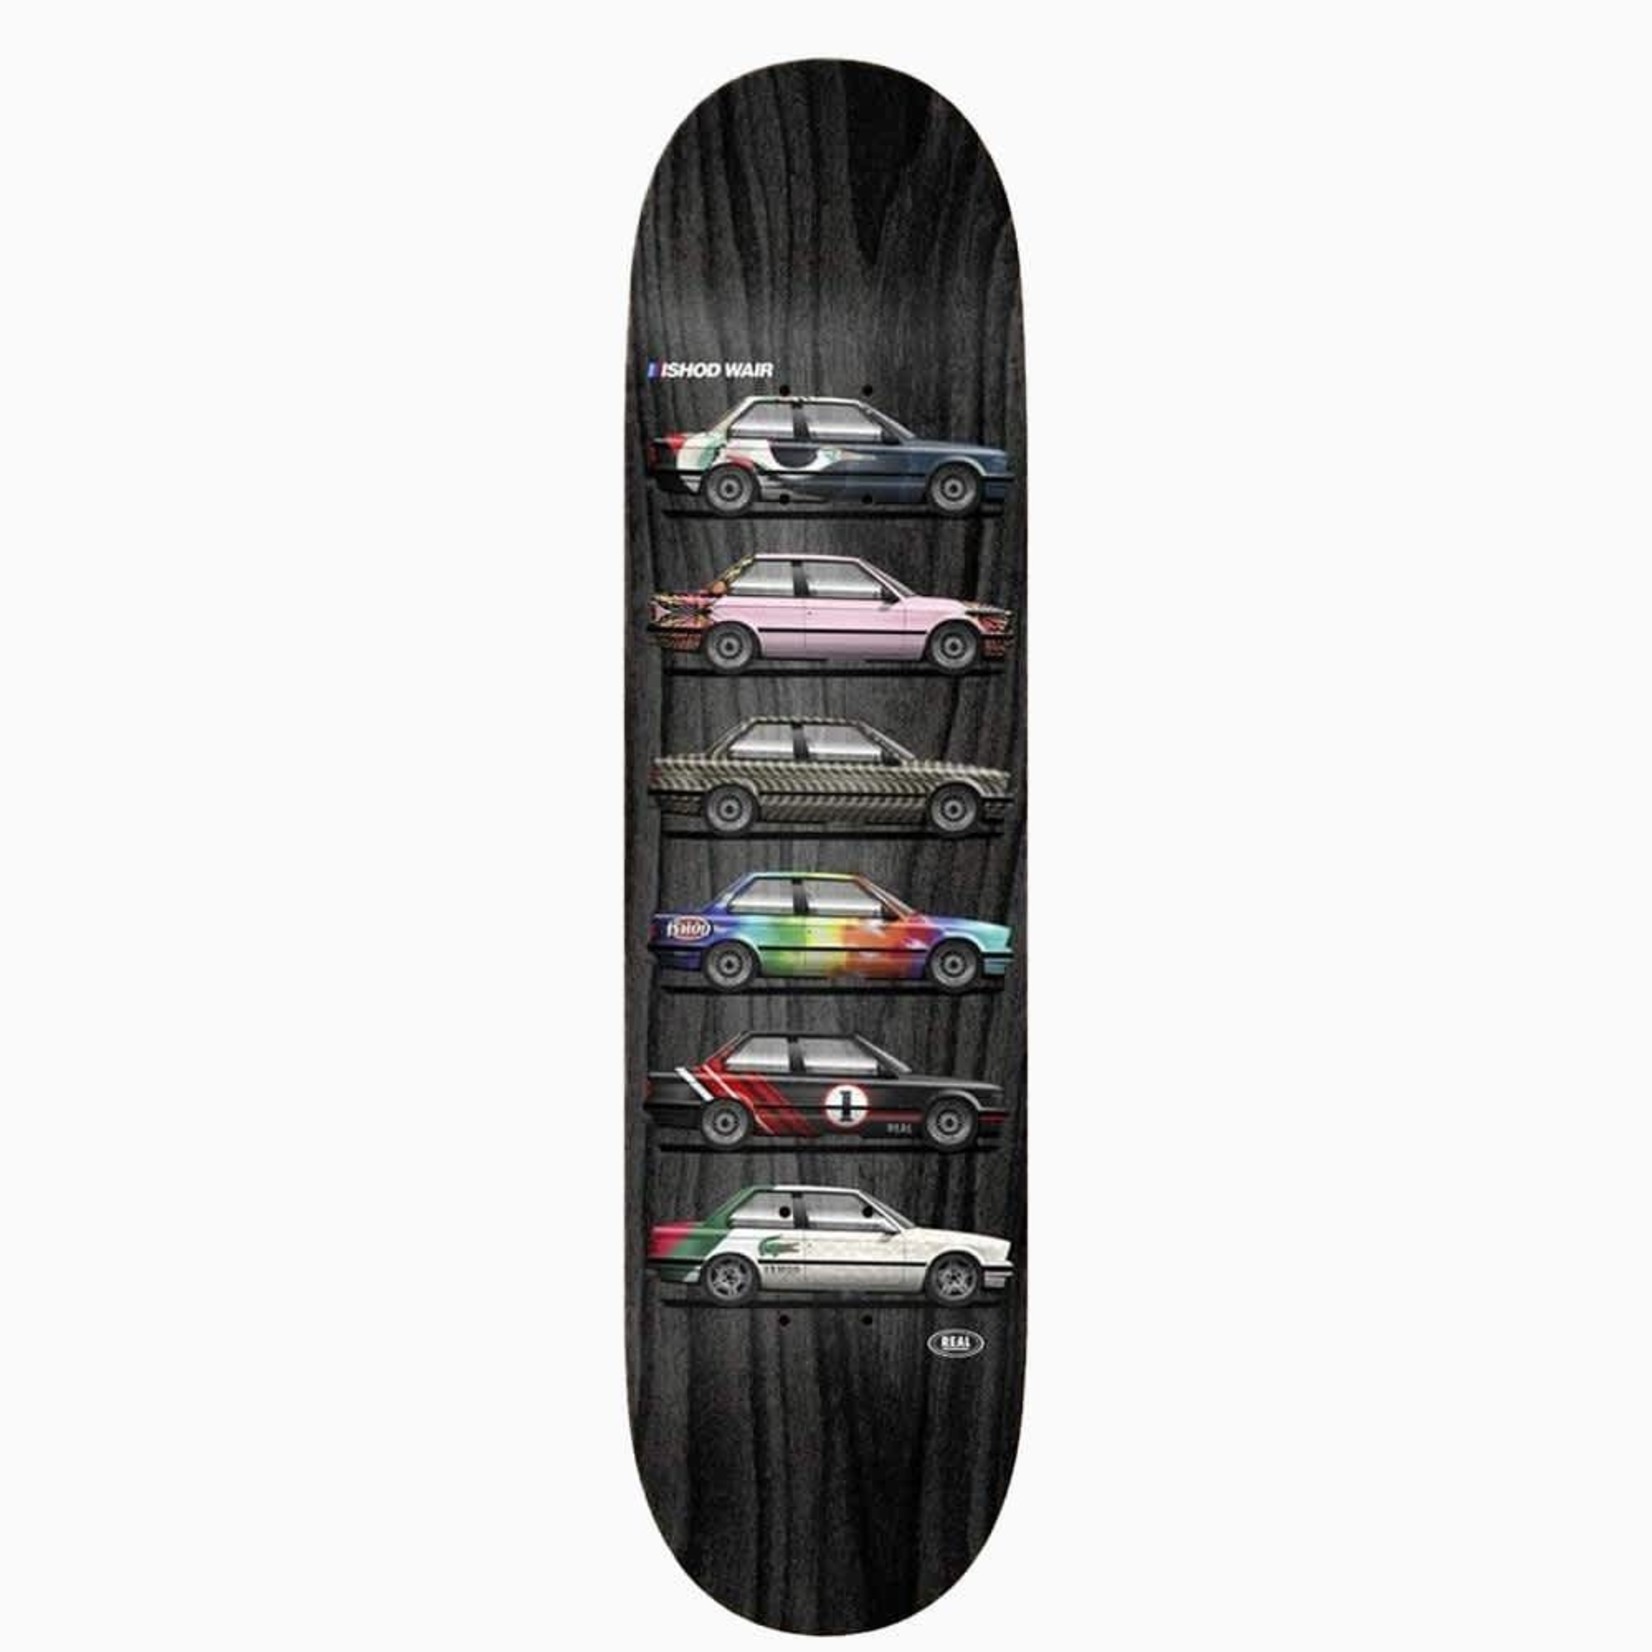 Real Skateboards Real Ishod Wair Customs Twin Tail II Deck 8.0"